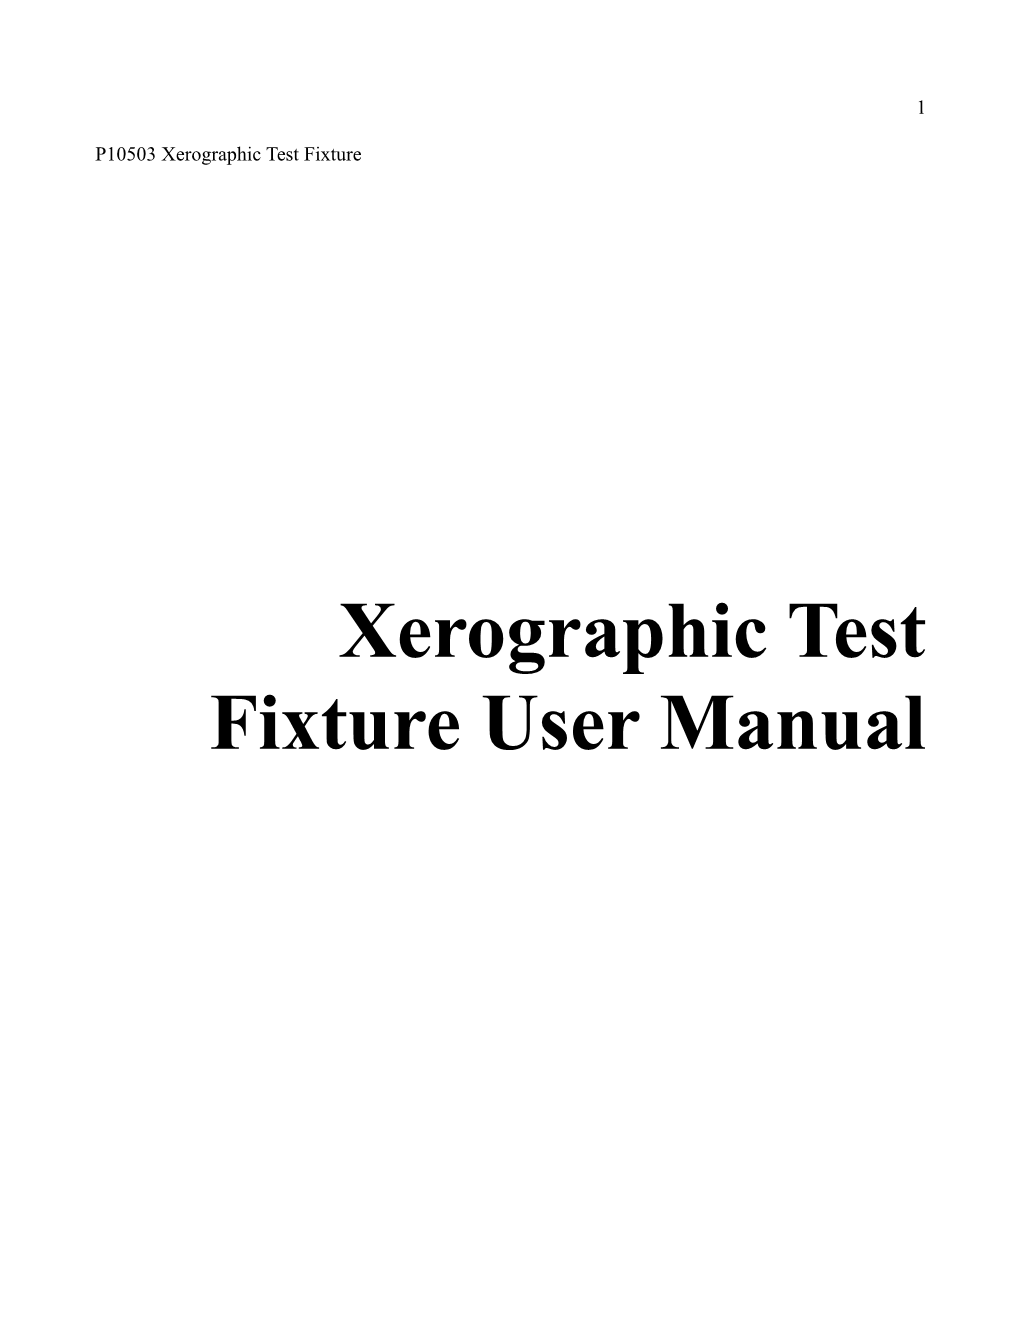 Xerographic Test Fixture User Manual